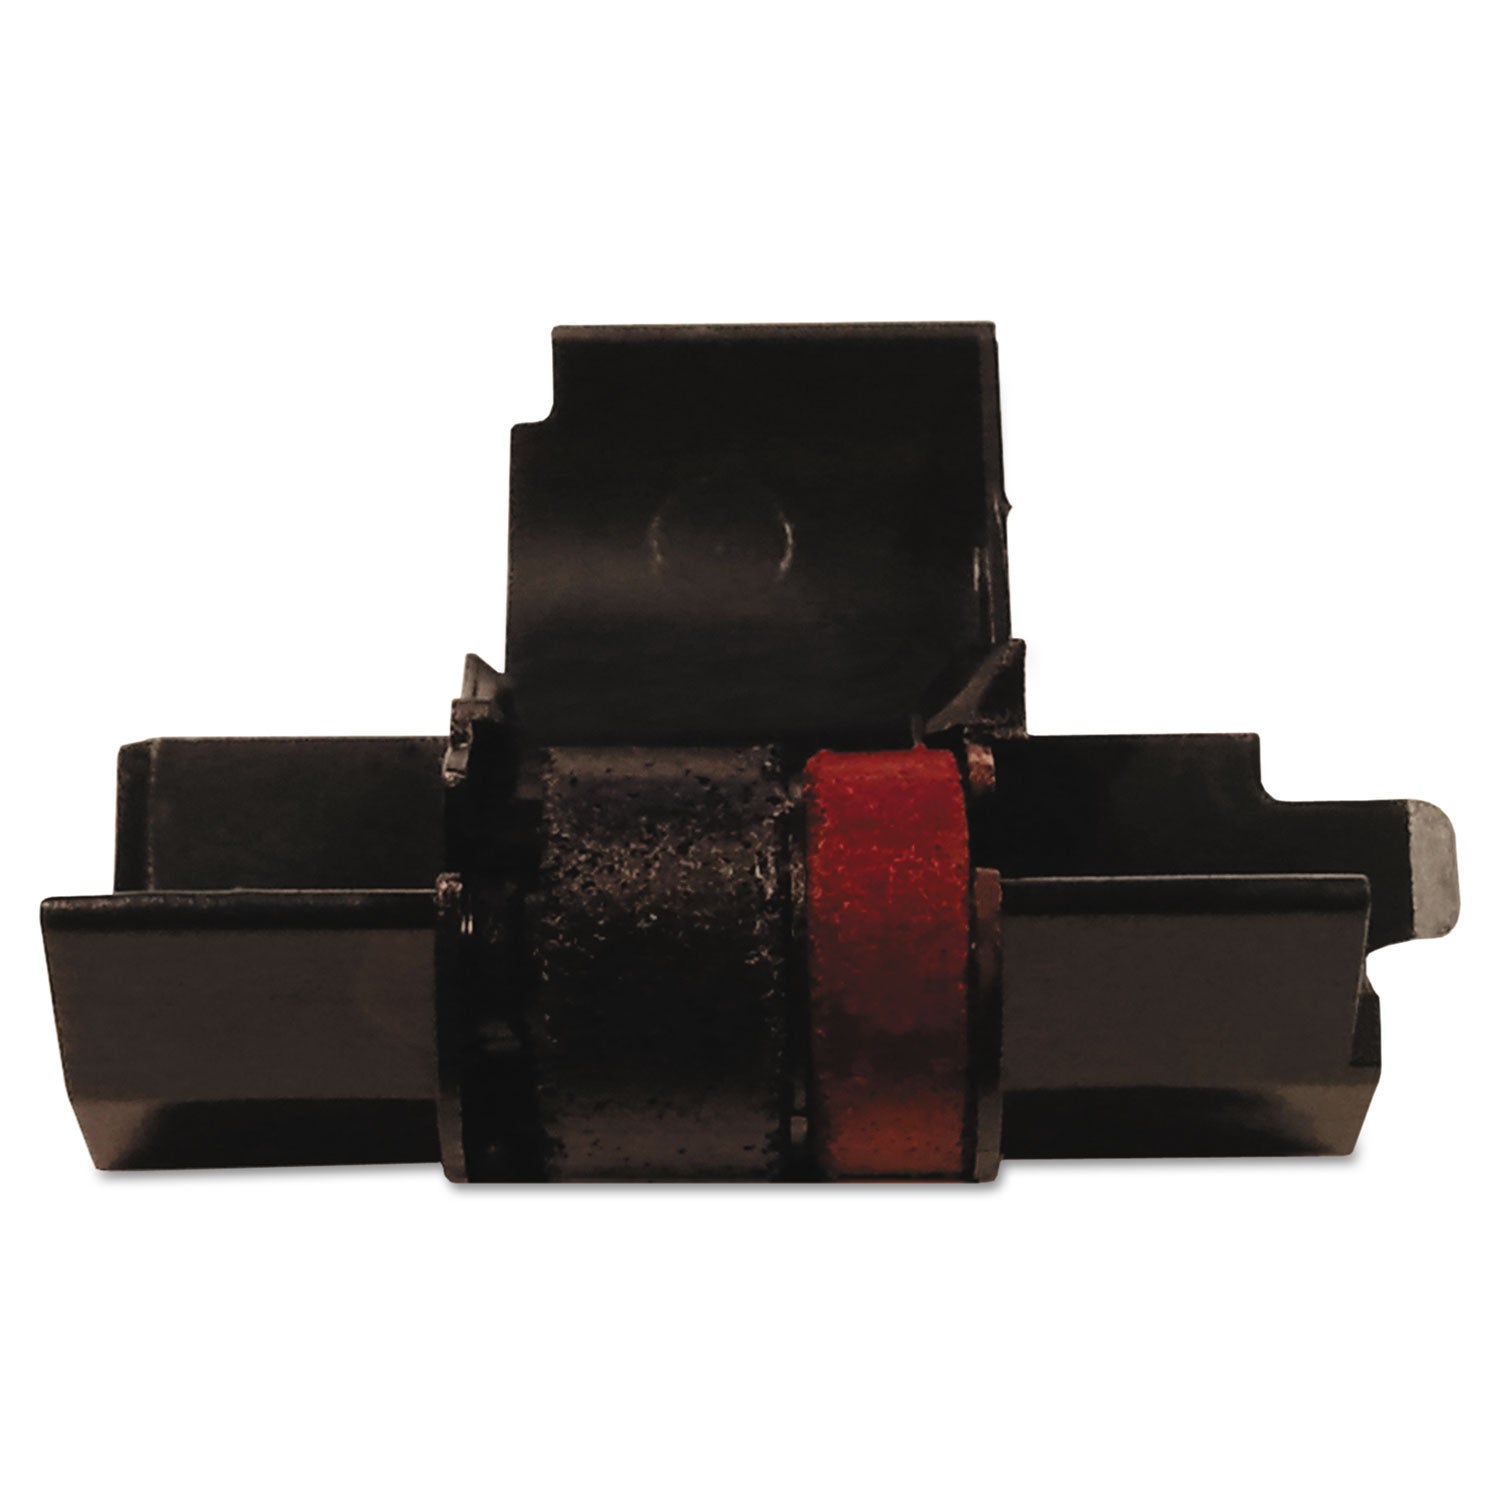 IR40T Compatible Calculator Ink Roller, Black/Red - 